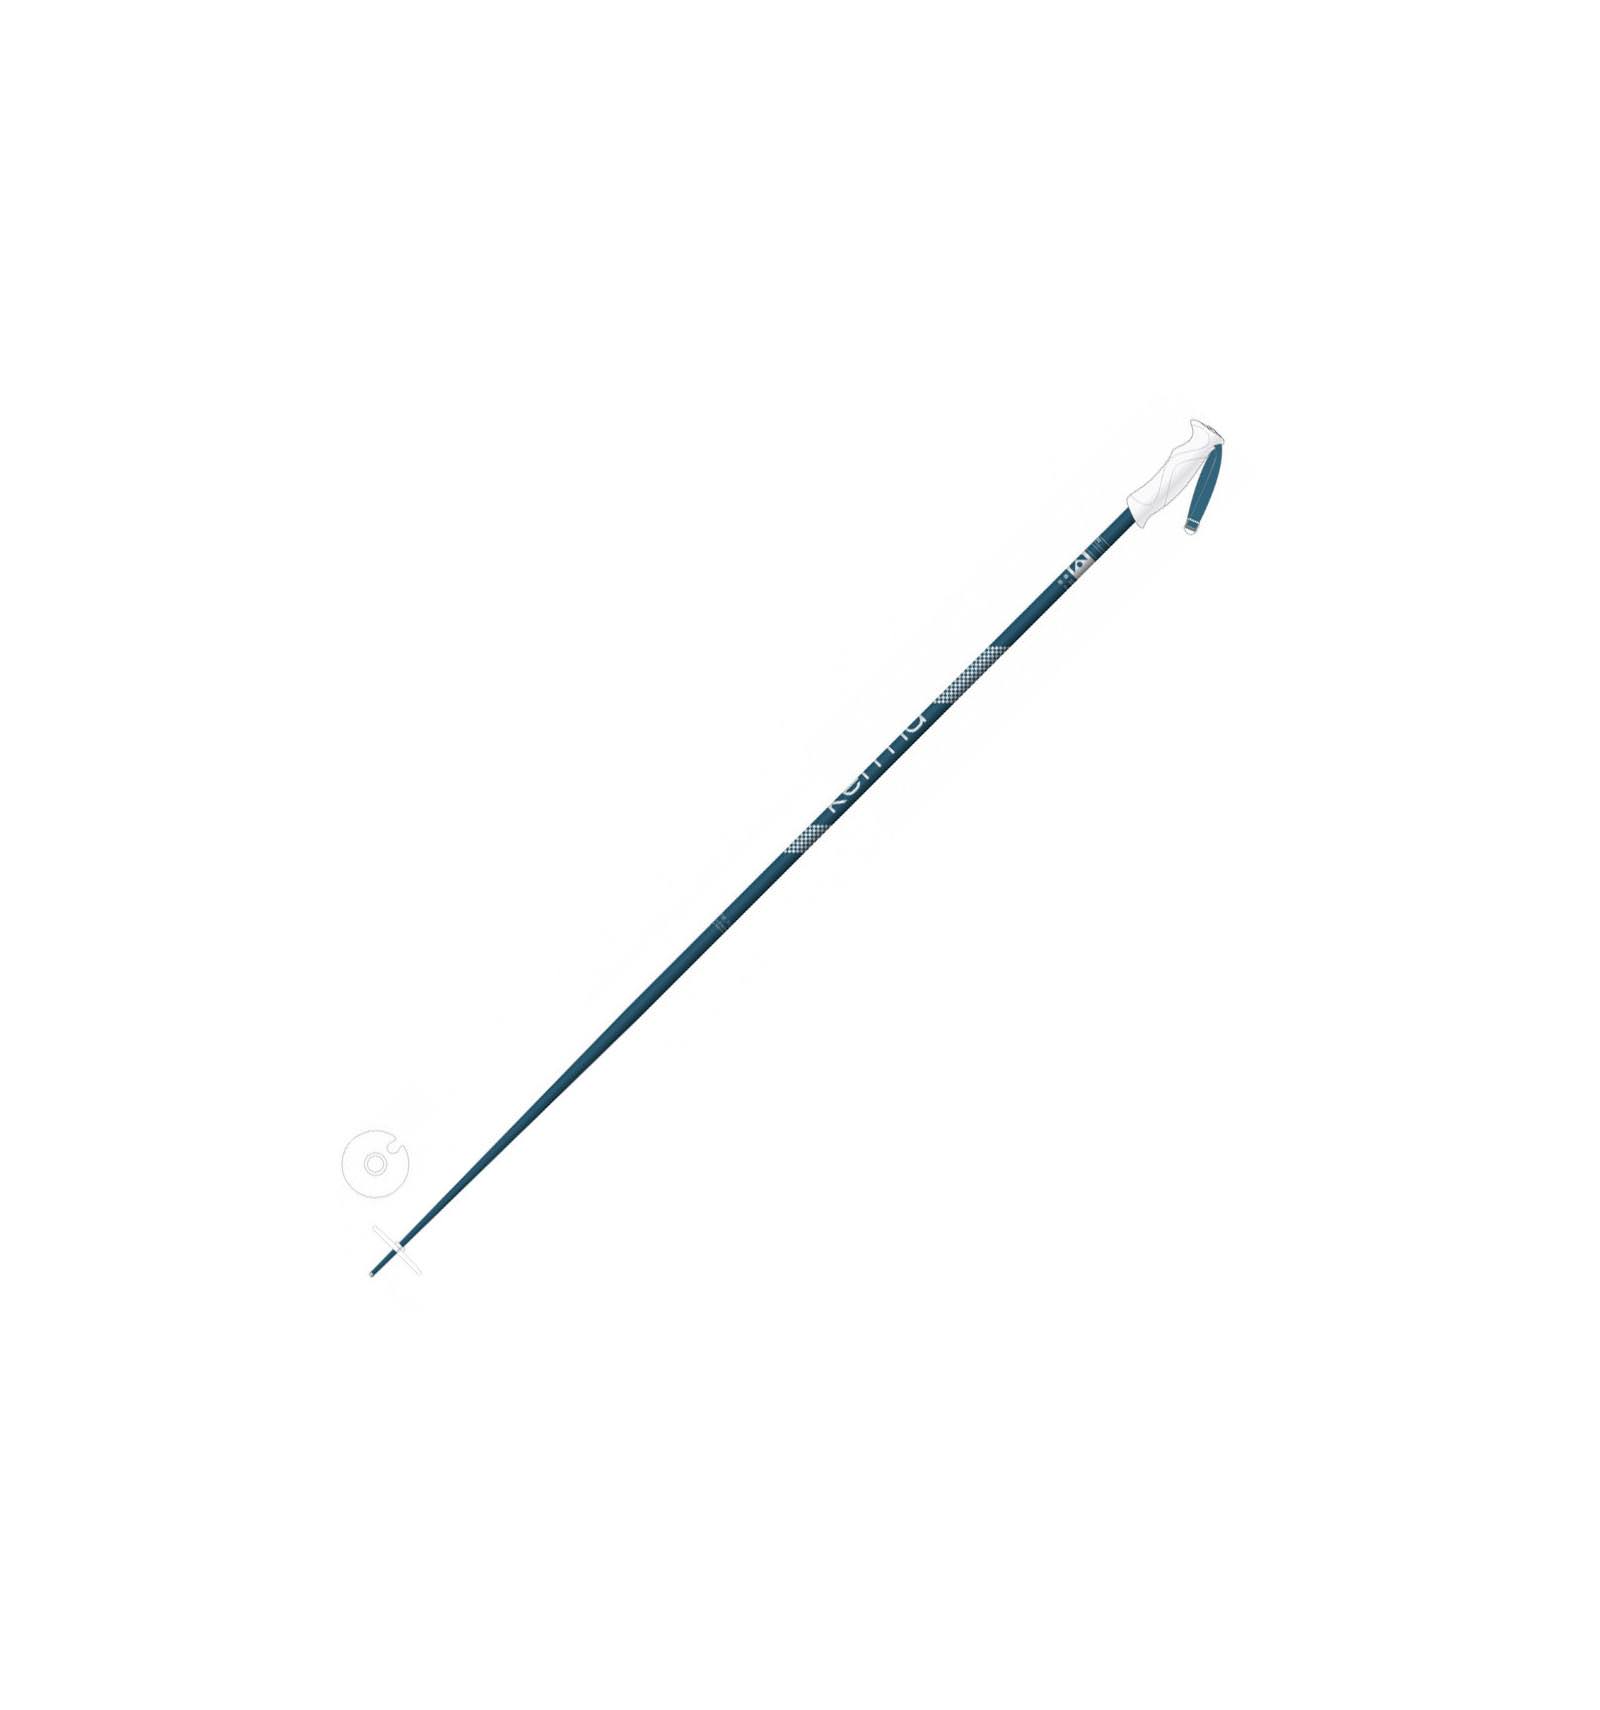 Dynastar Elite Light Alpine Skiing Pole - Blue, 110cm